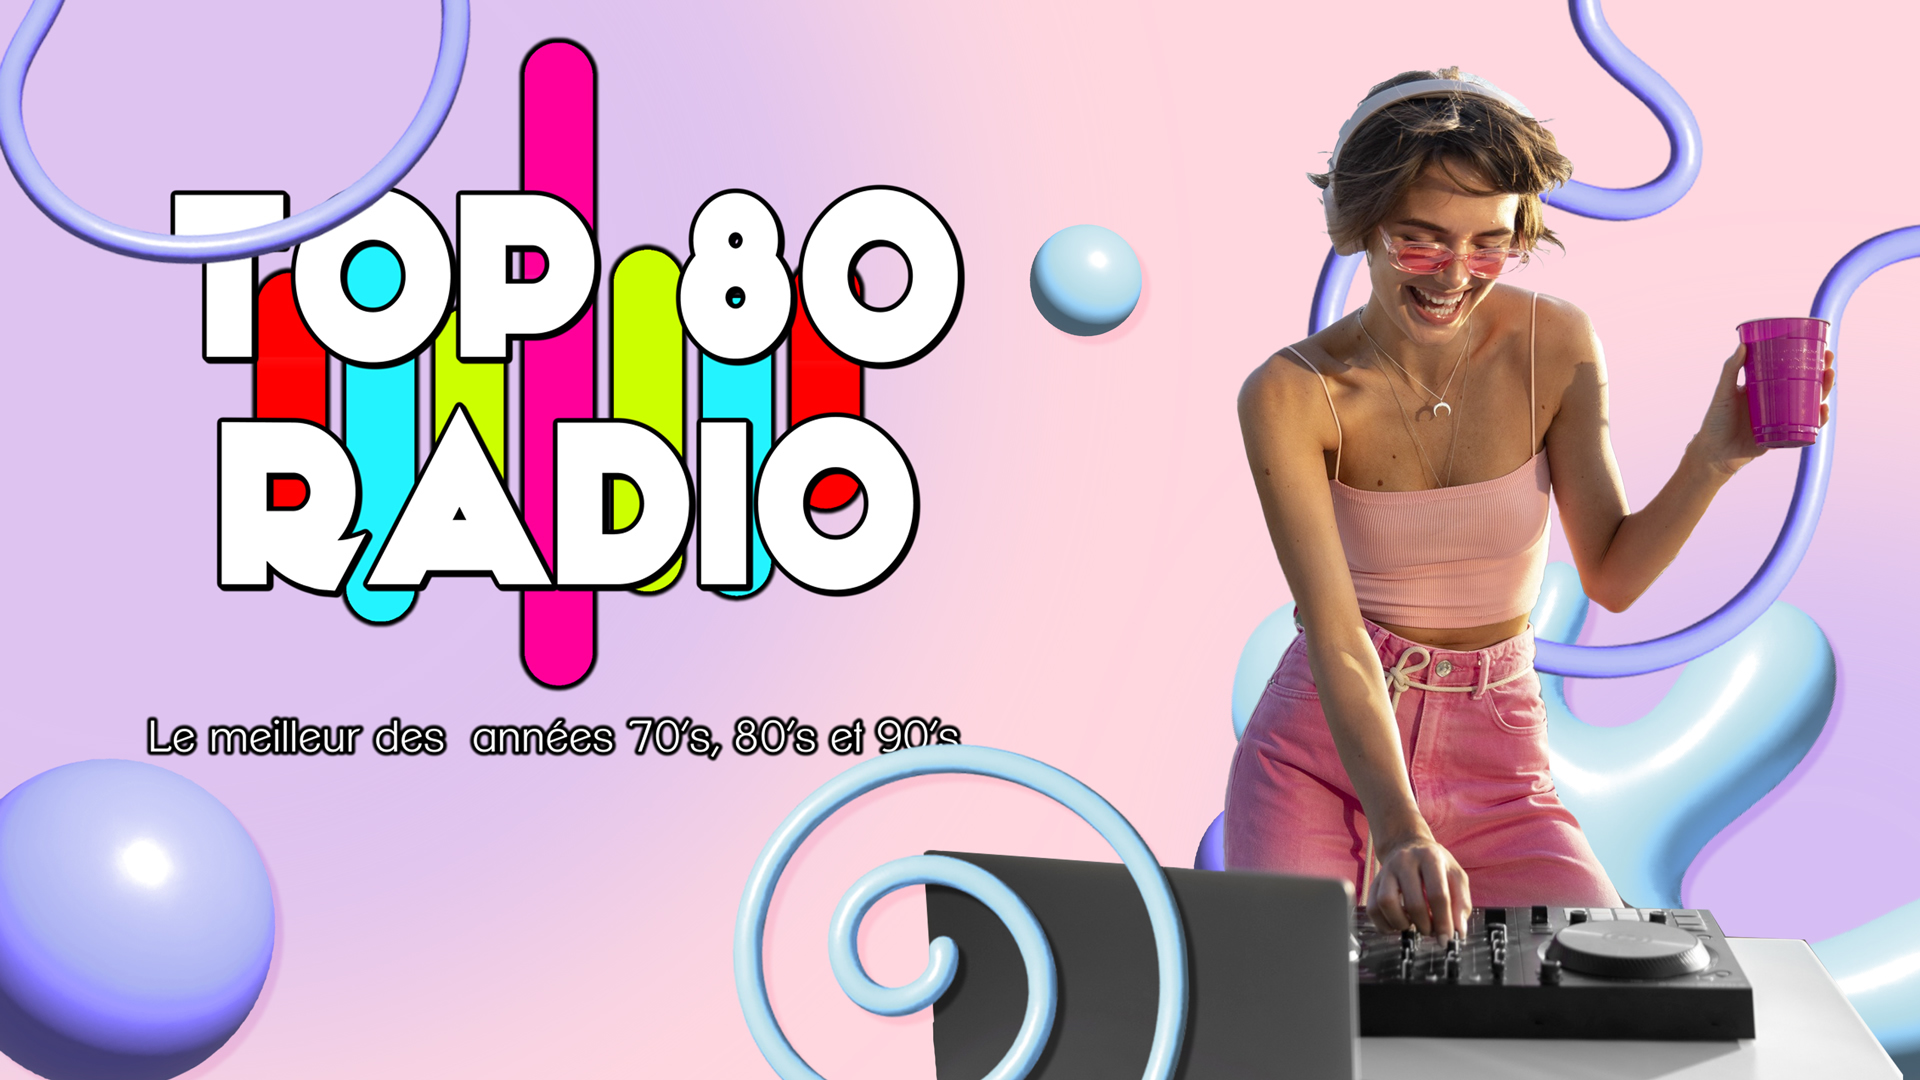 WALLPAPER–TOP-80-RADIO—46